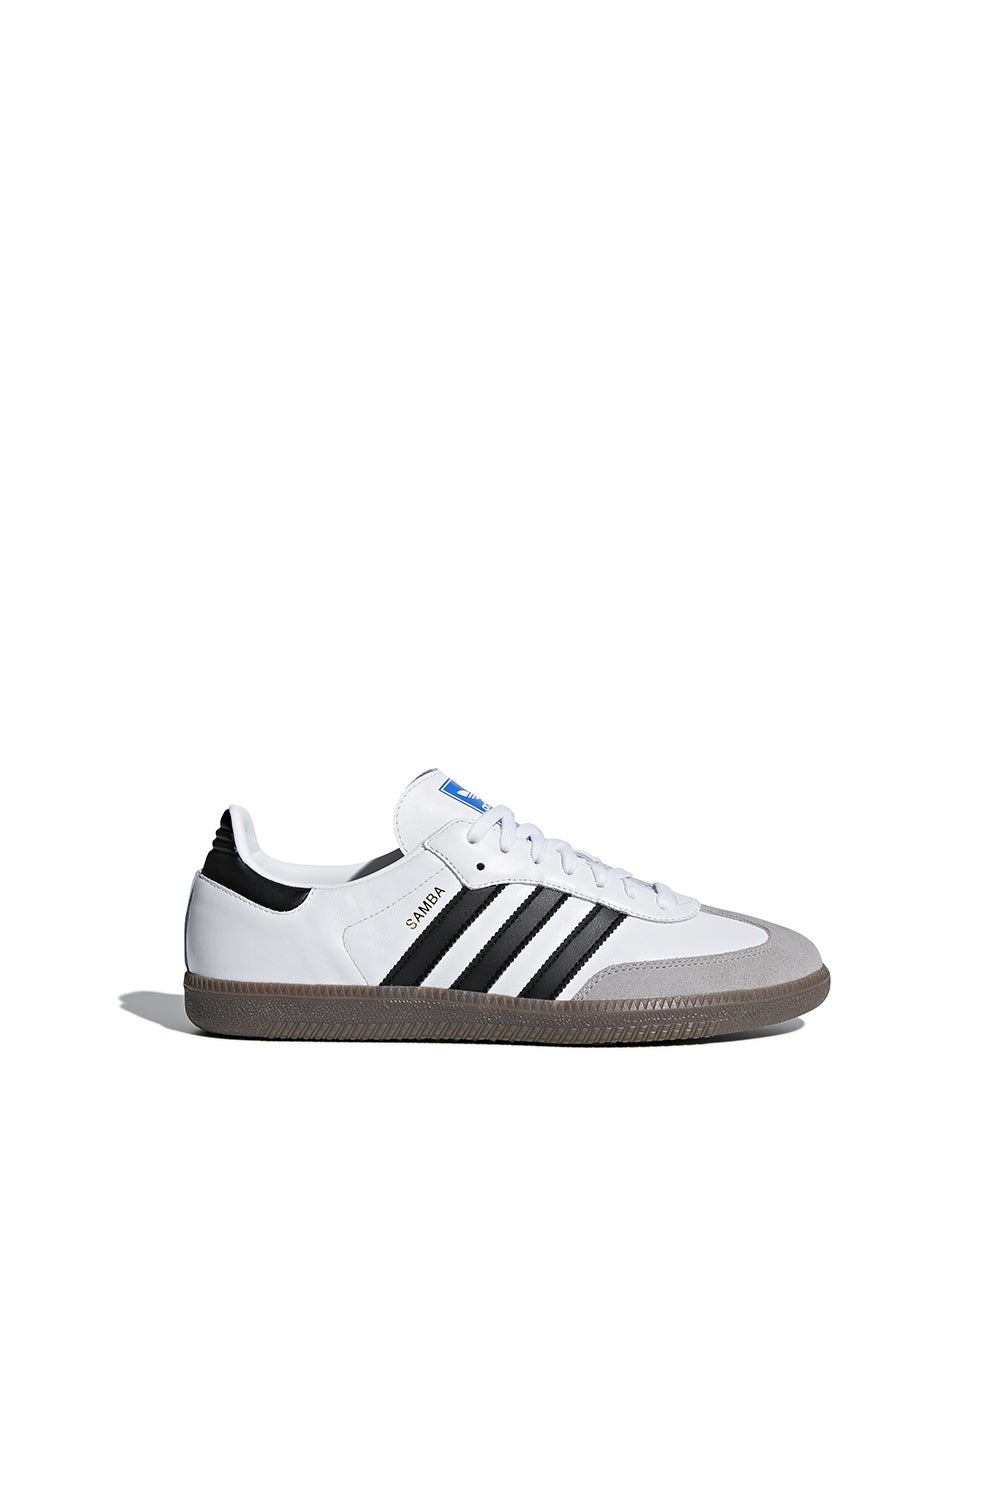 Adidas Samba Og Shoes Cloud White/core Black/clear Granite | Karen ...